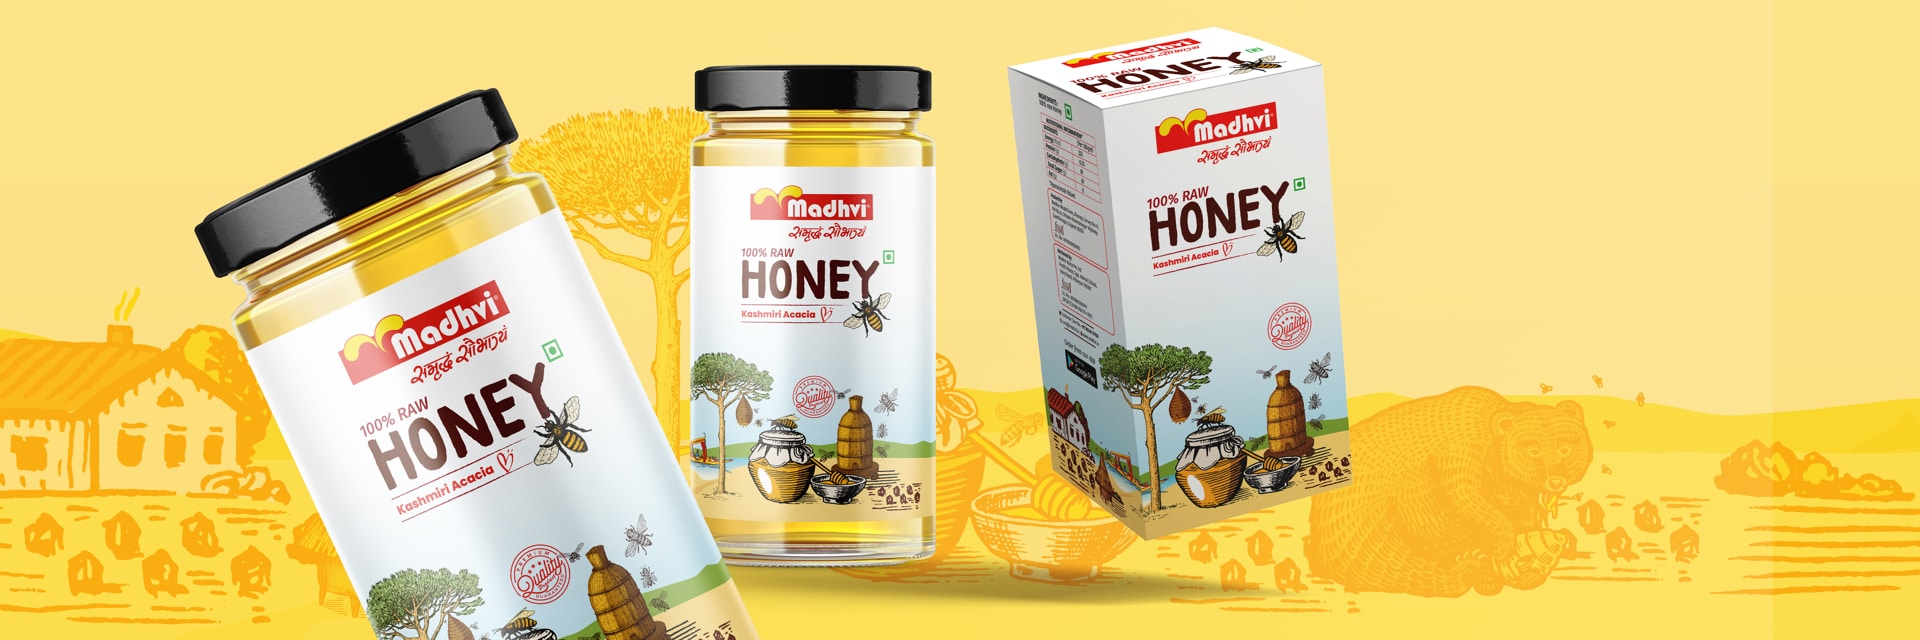 honey Brand packaging Design Agency Creativeline Gandhinagar ahmedabad